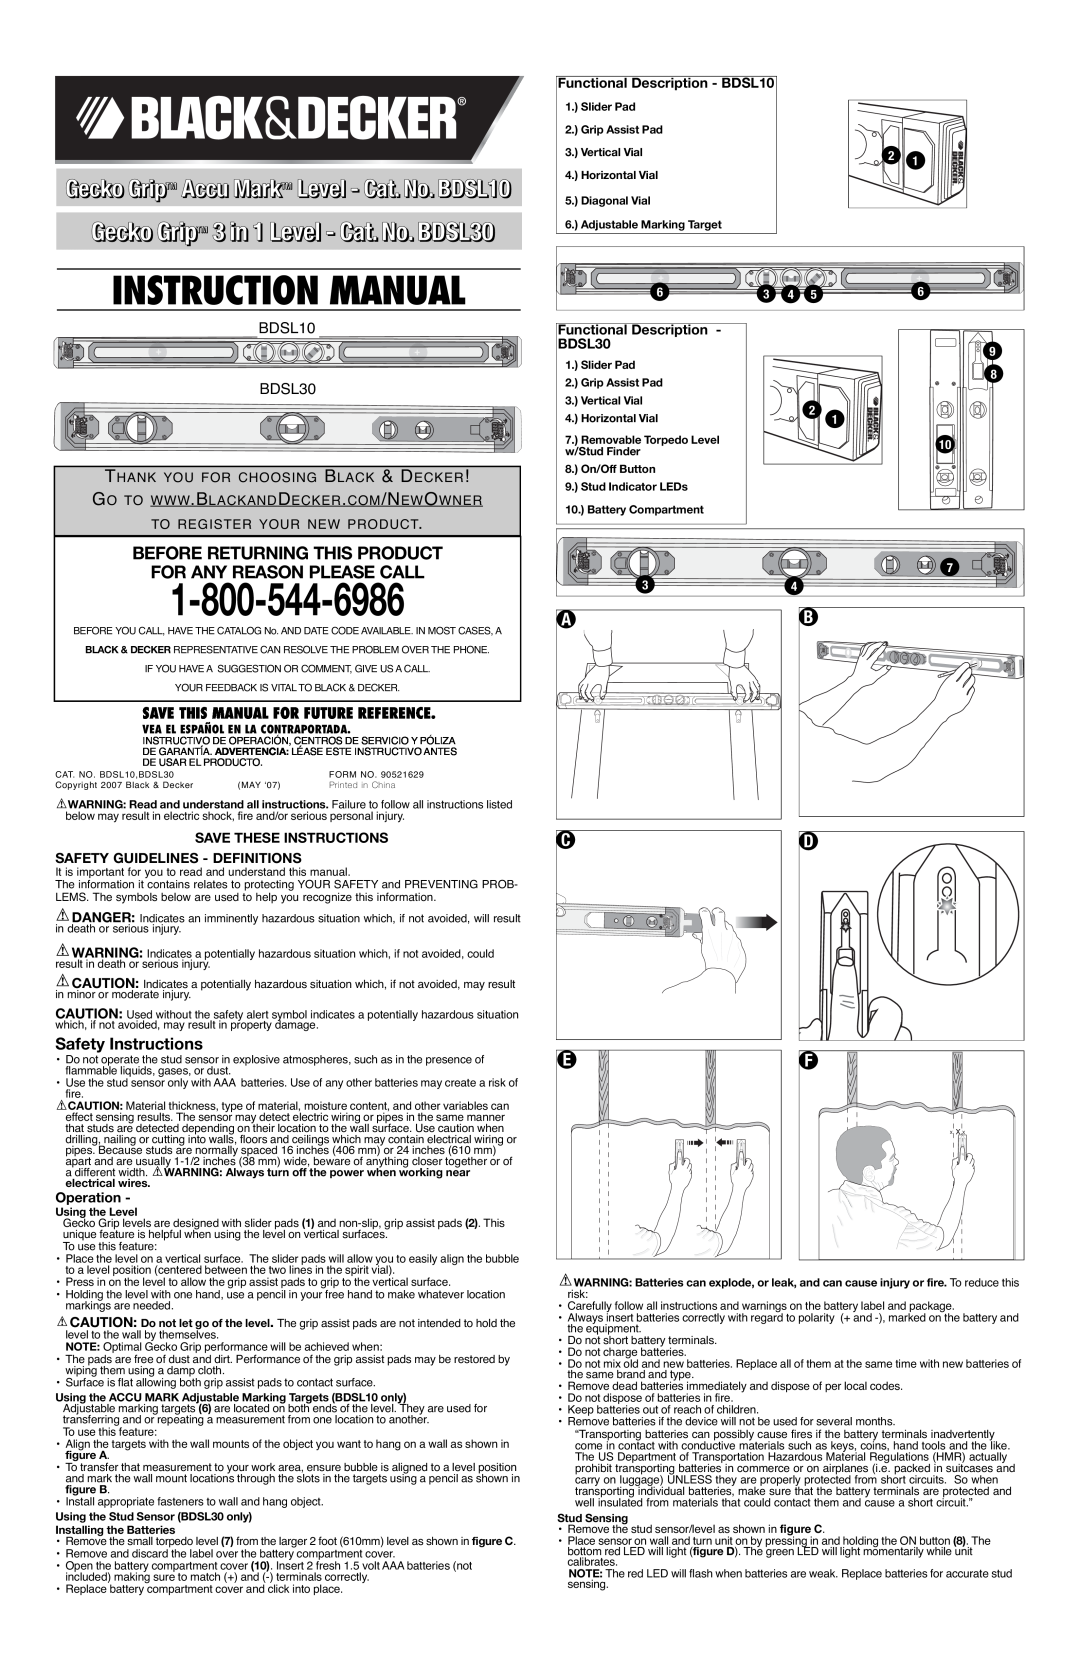 Black & Decker BDSL10 instruction manual Gecko GripTM 3 in 1 Level - Cat. No. BDSL30, Before Returning This Product 